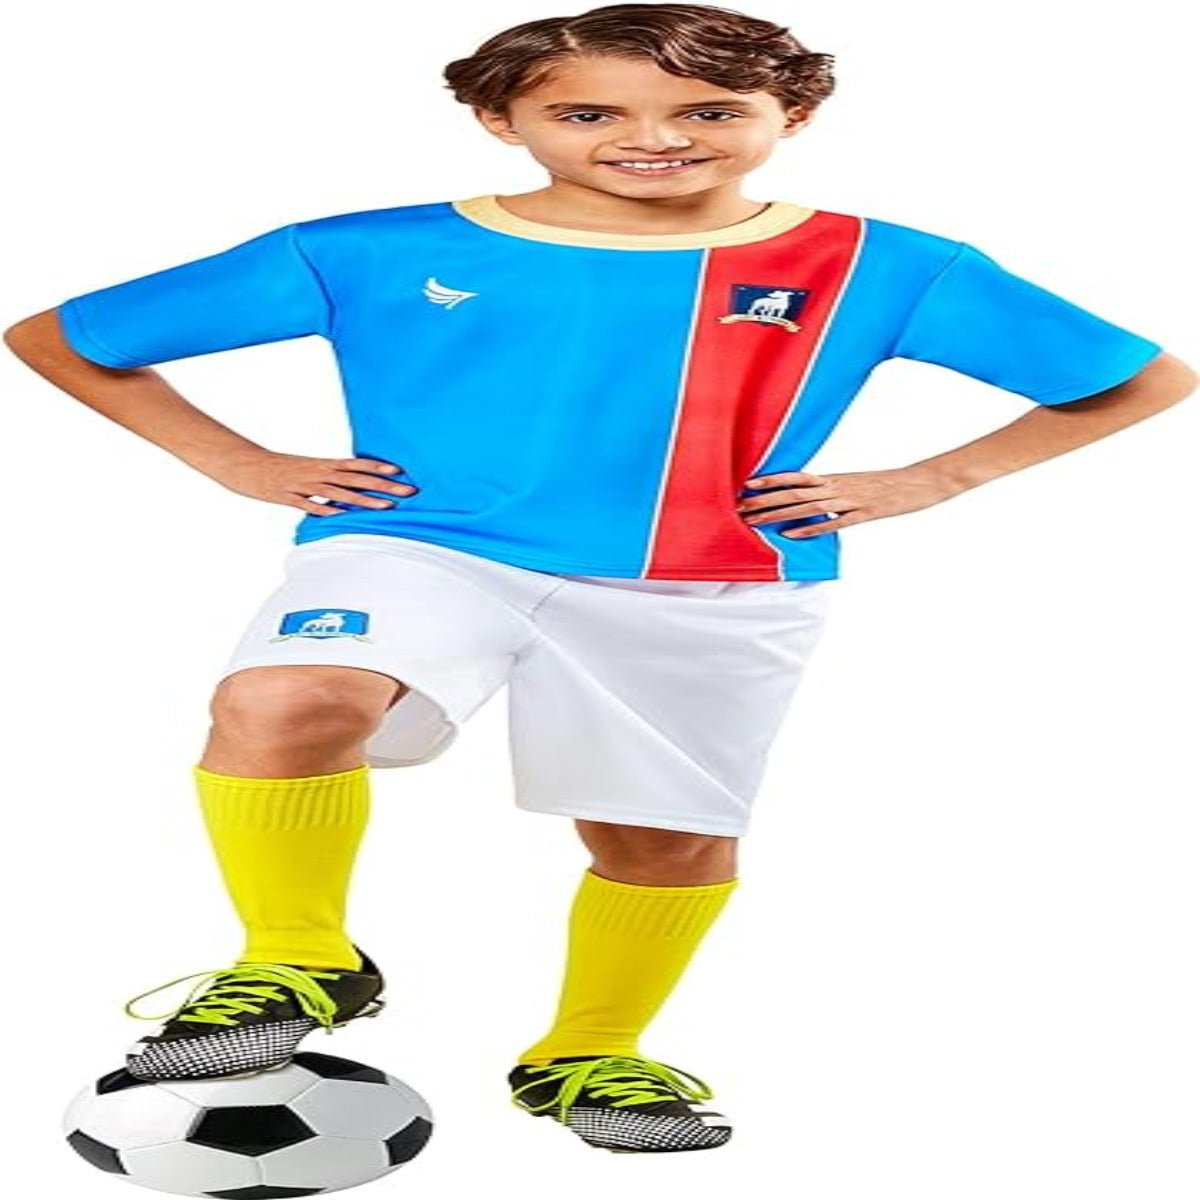 Rubie's Child Ted Lasso Afc Richmond Soccer Uniform Costume - worldclasscostumes